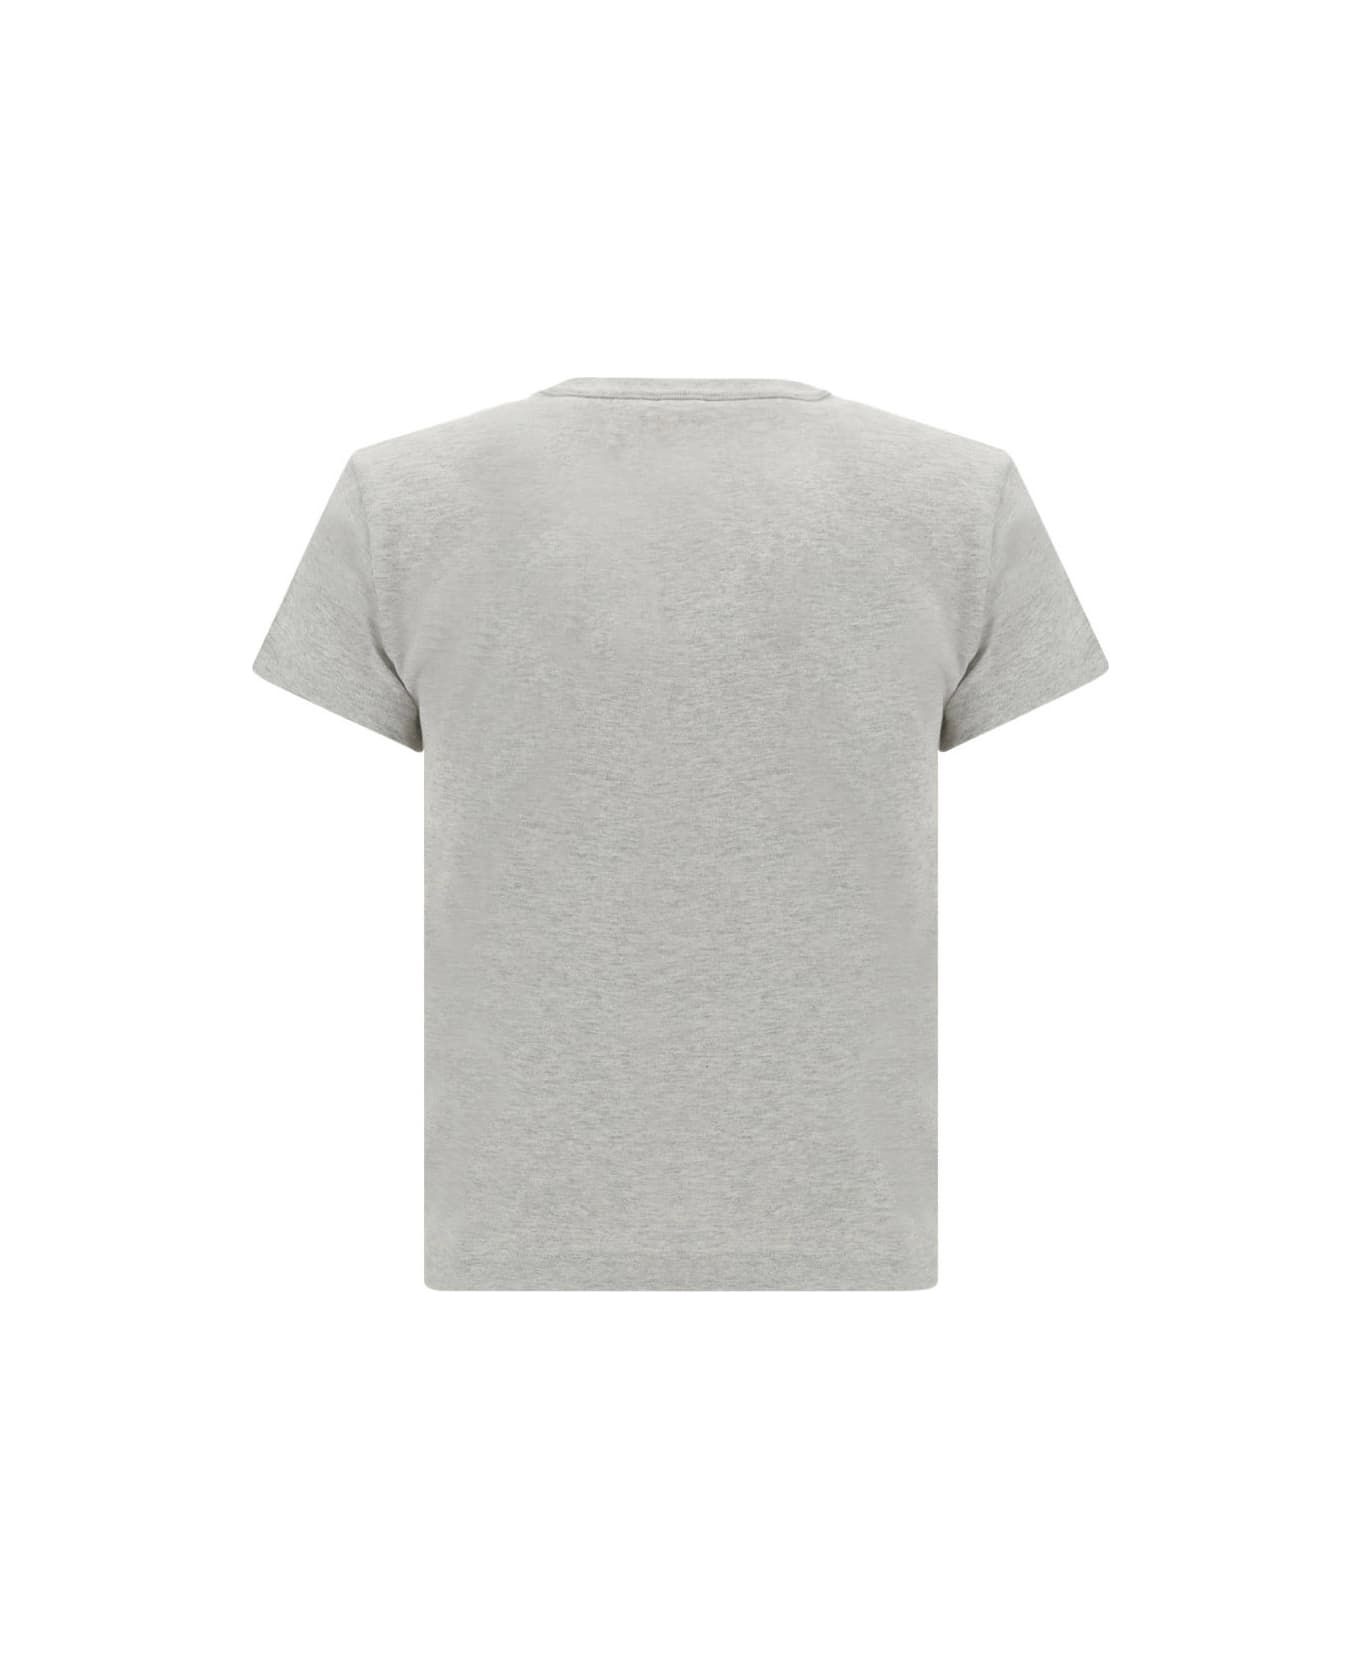 Alexander Wang T-shirt - Grigio melange Tシャツ